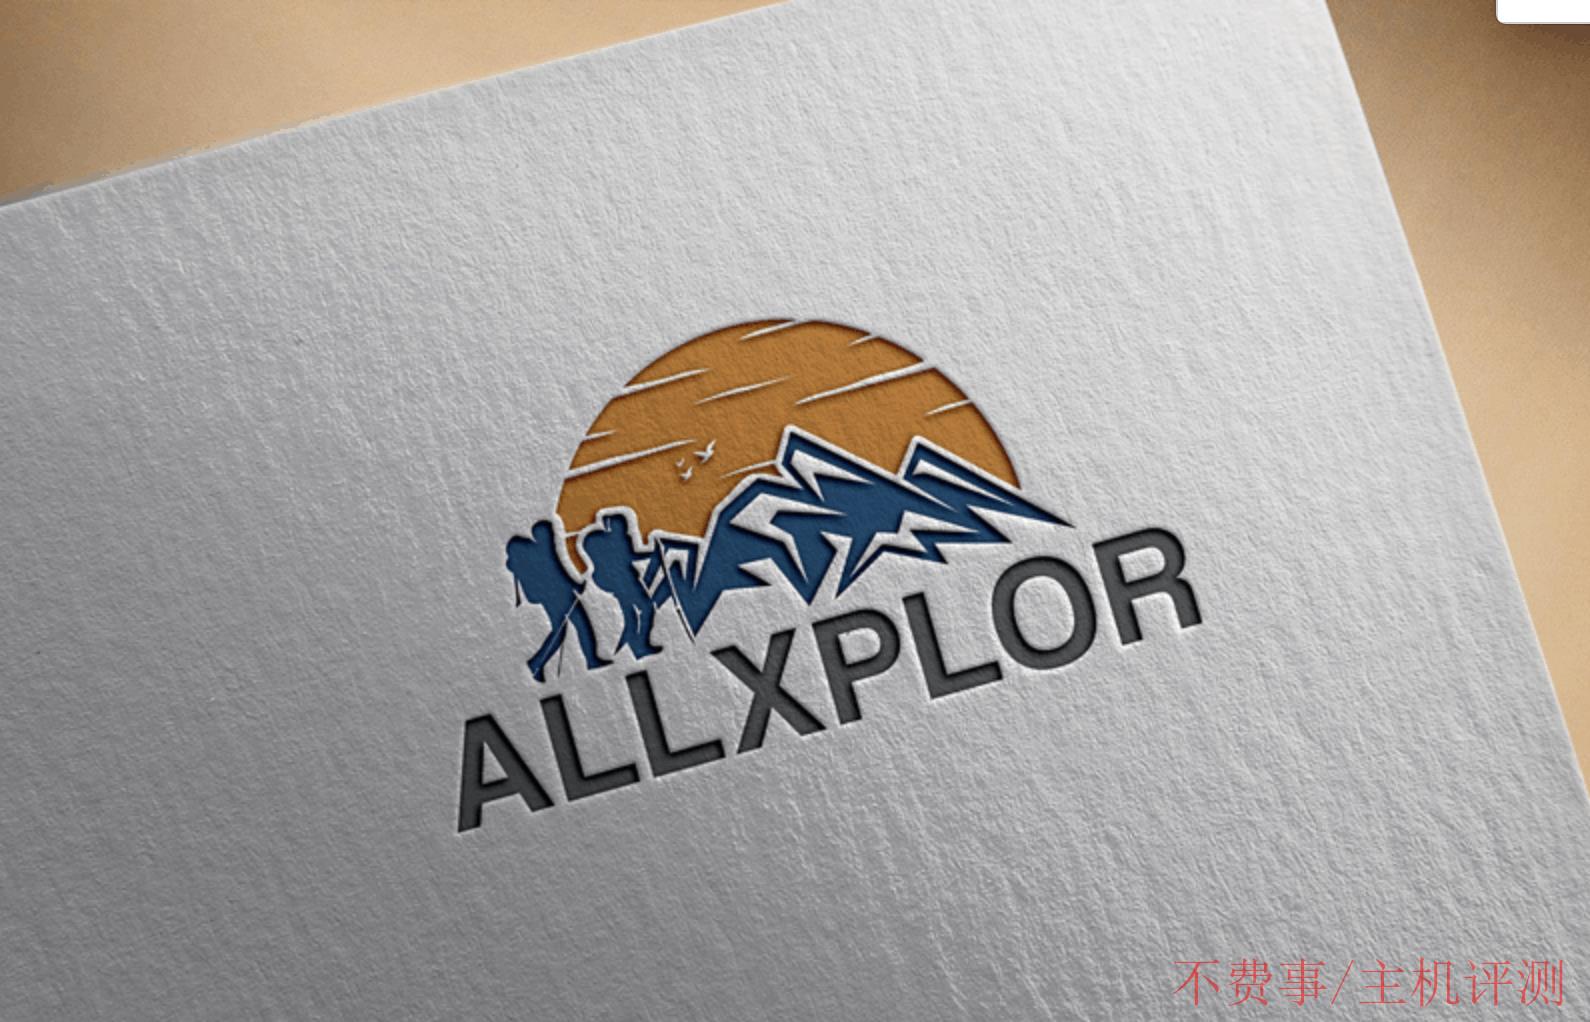 Renderforest alternatives - sample logo made by DesignCrowd designer - AllXPlor